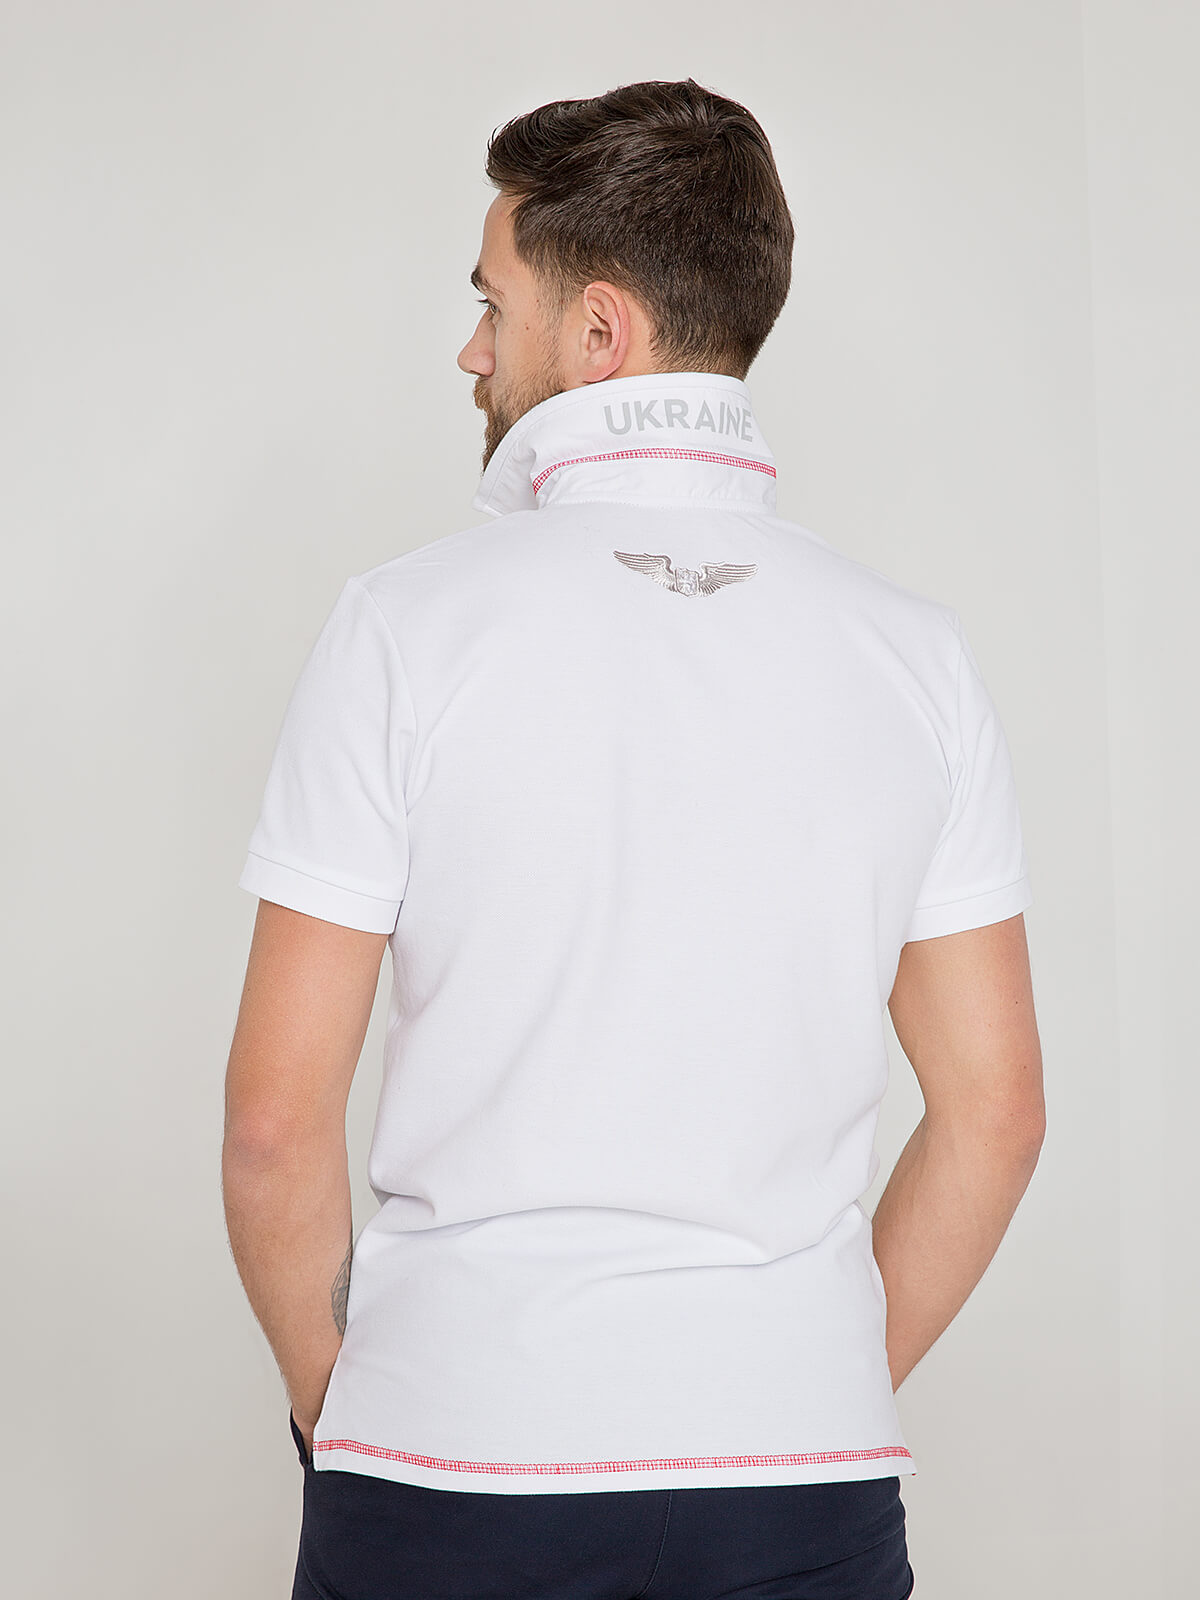 Men's Polo Shirt Wings. Color white. 1.